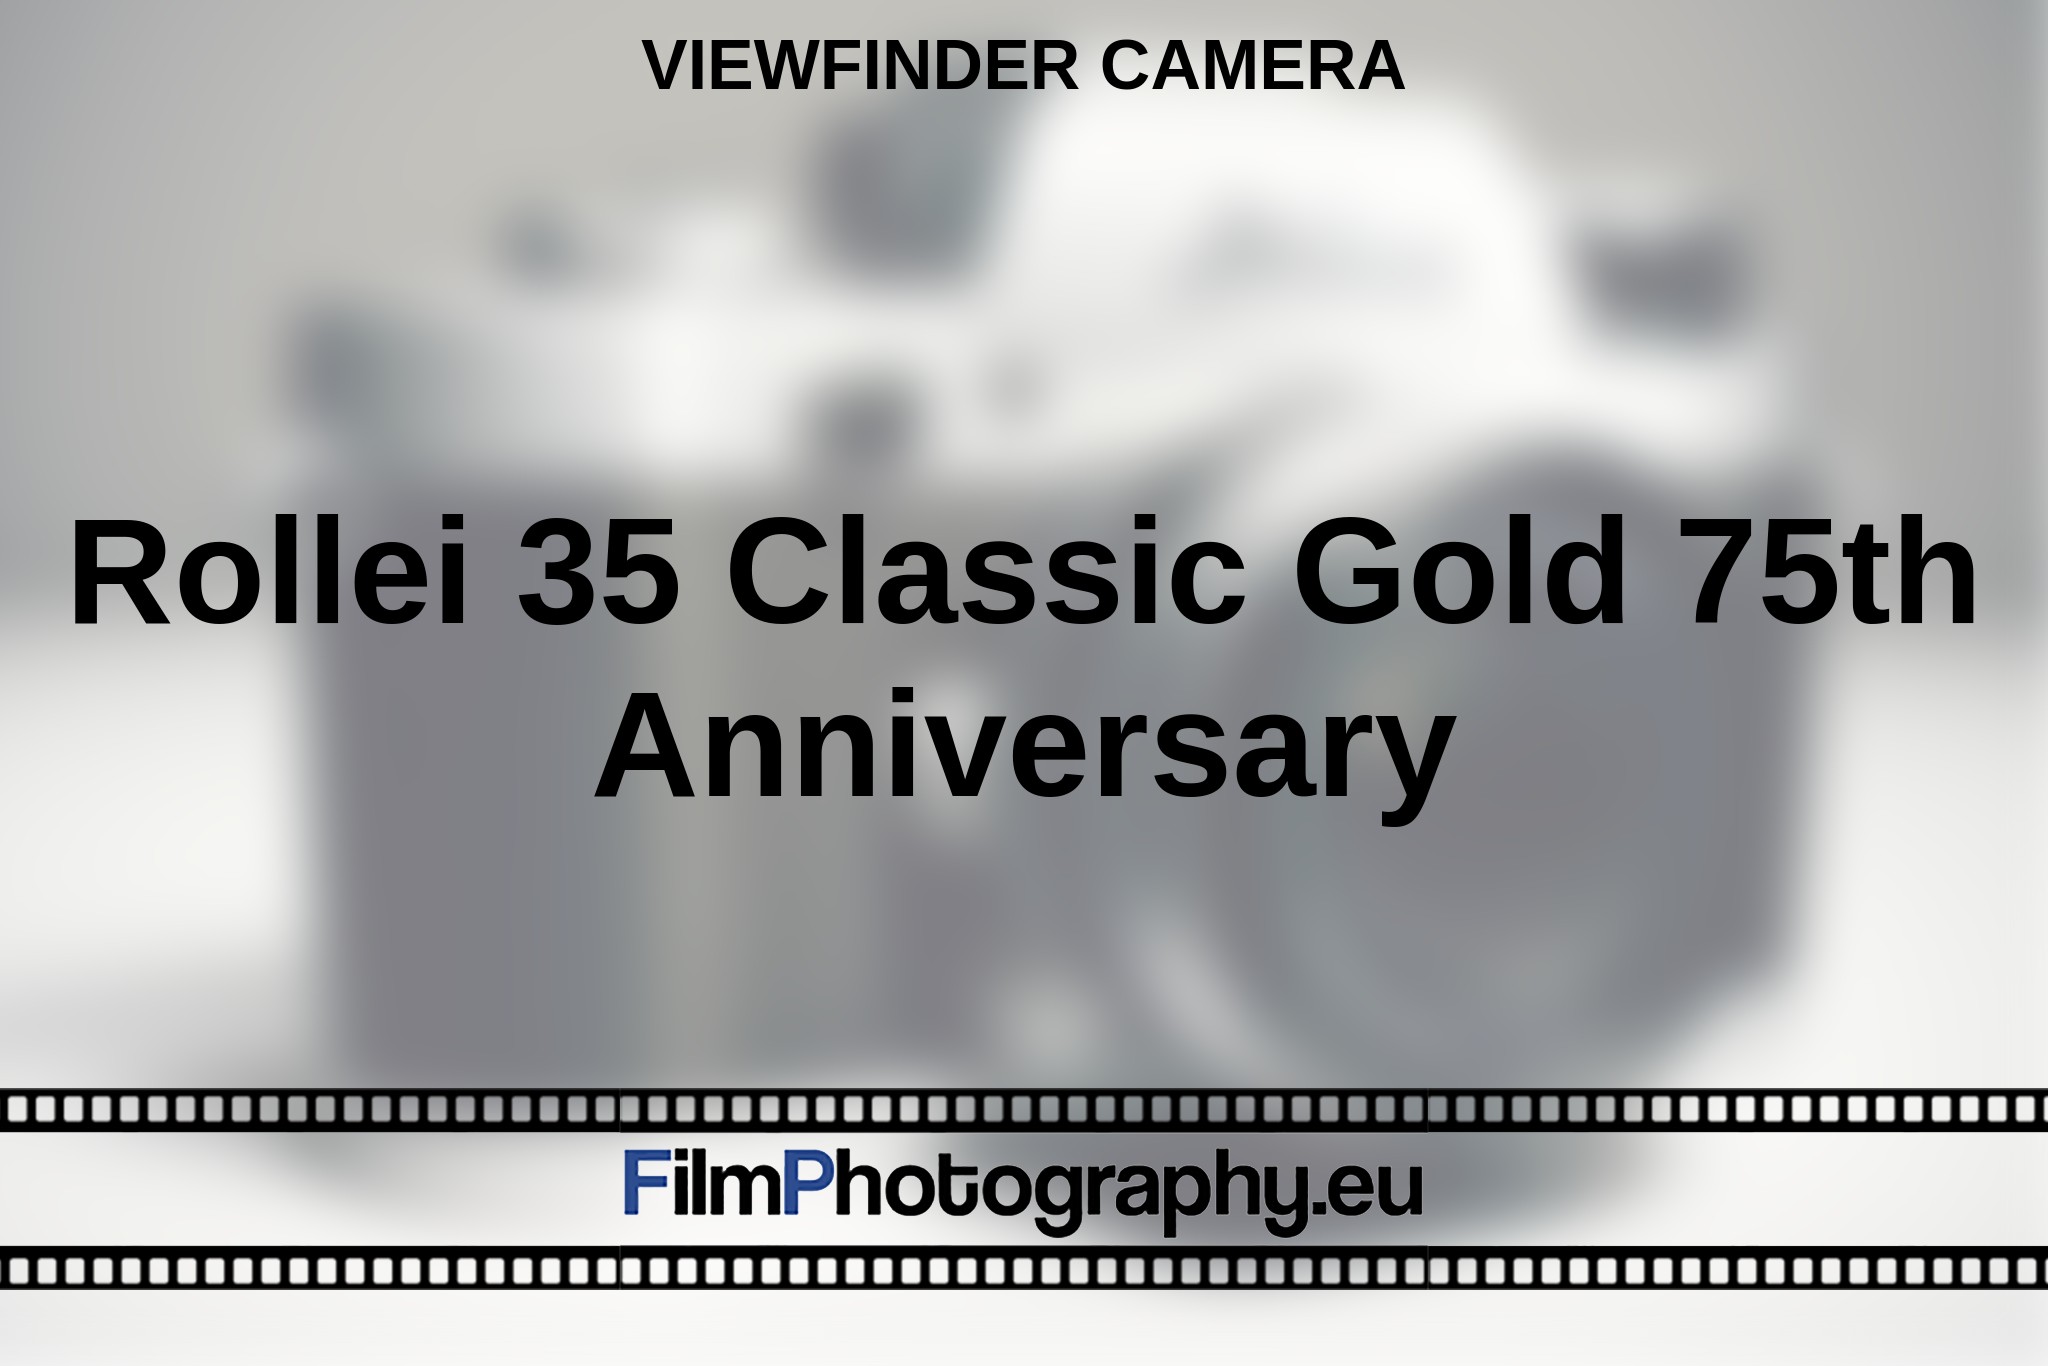 rollei-35-classic-gold-75th-anniversary-viewfinder-camera-en-bnv.jpg